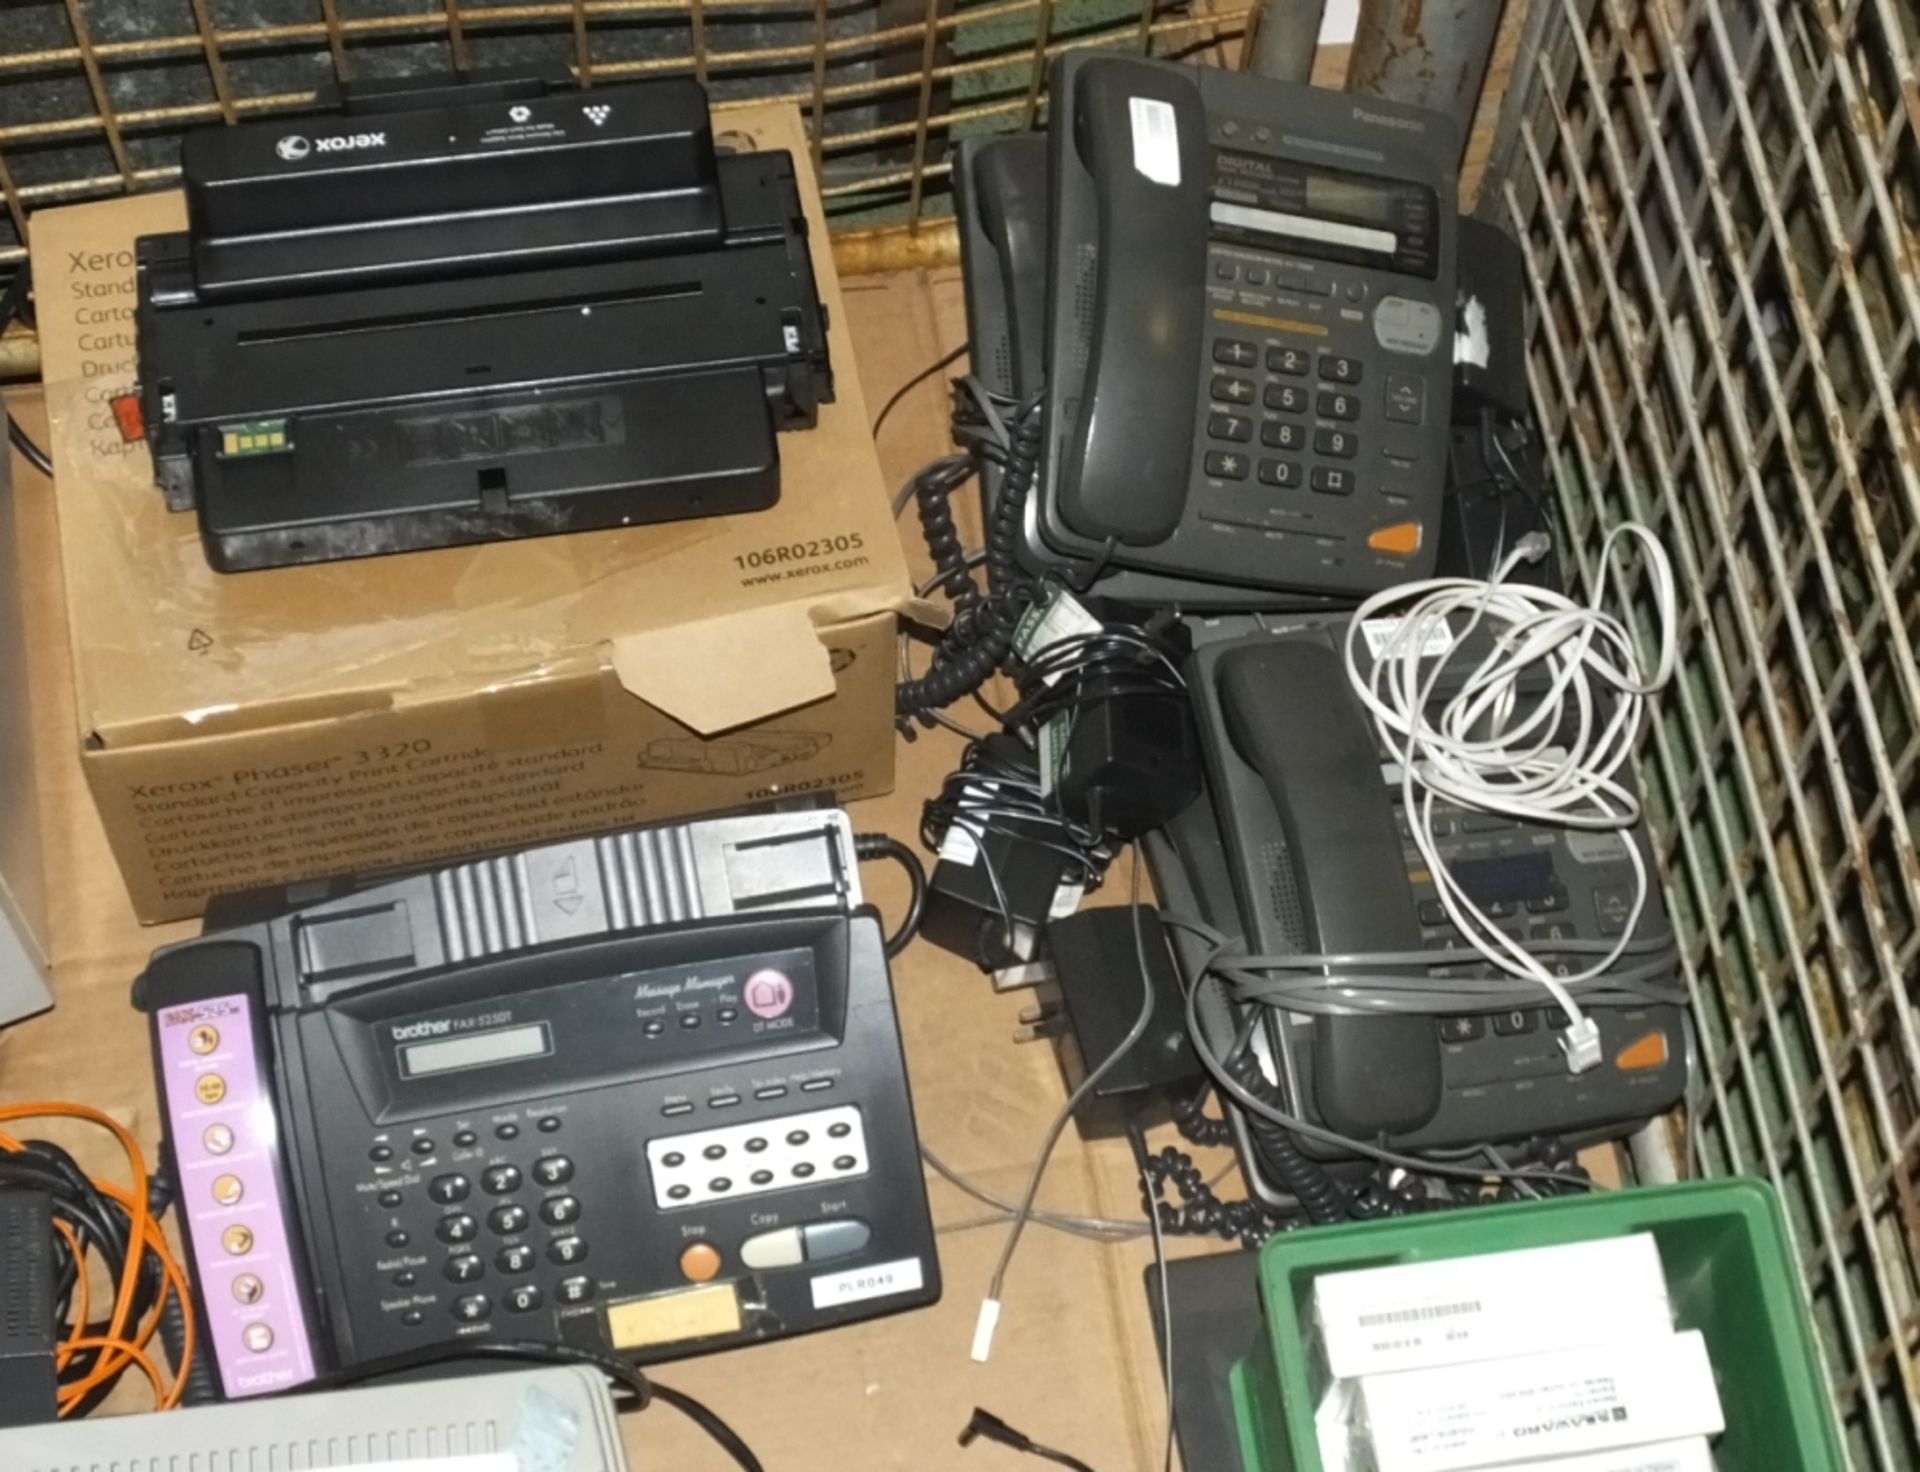 5x Panasonic Desk Phones, Brother Electronic Typewriter, Media Convertor, Rexel 250 Shredd - Image 2 of 5